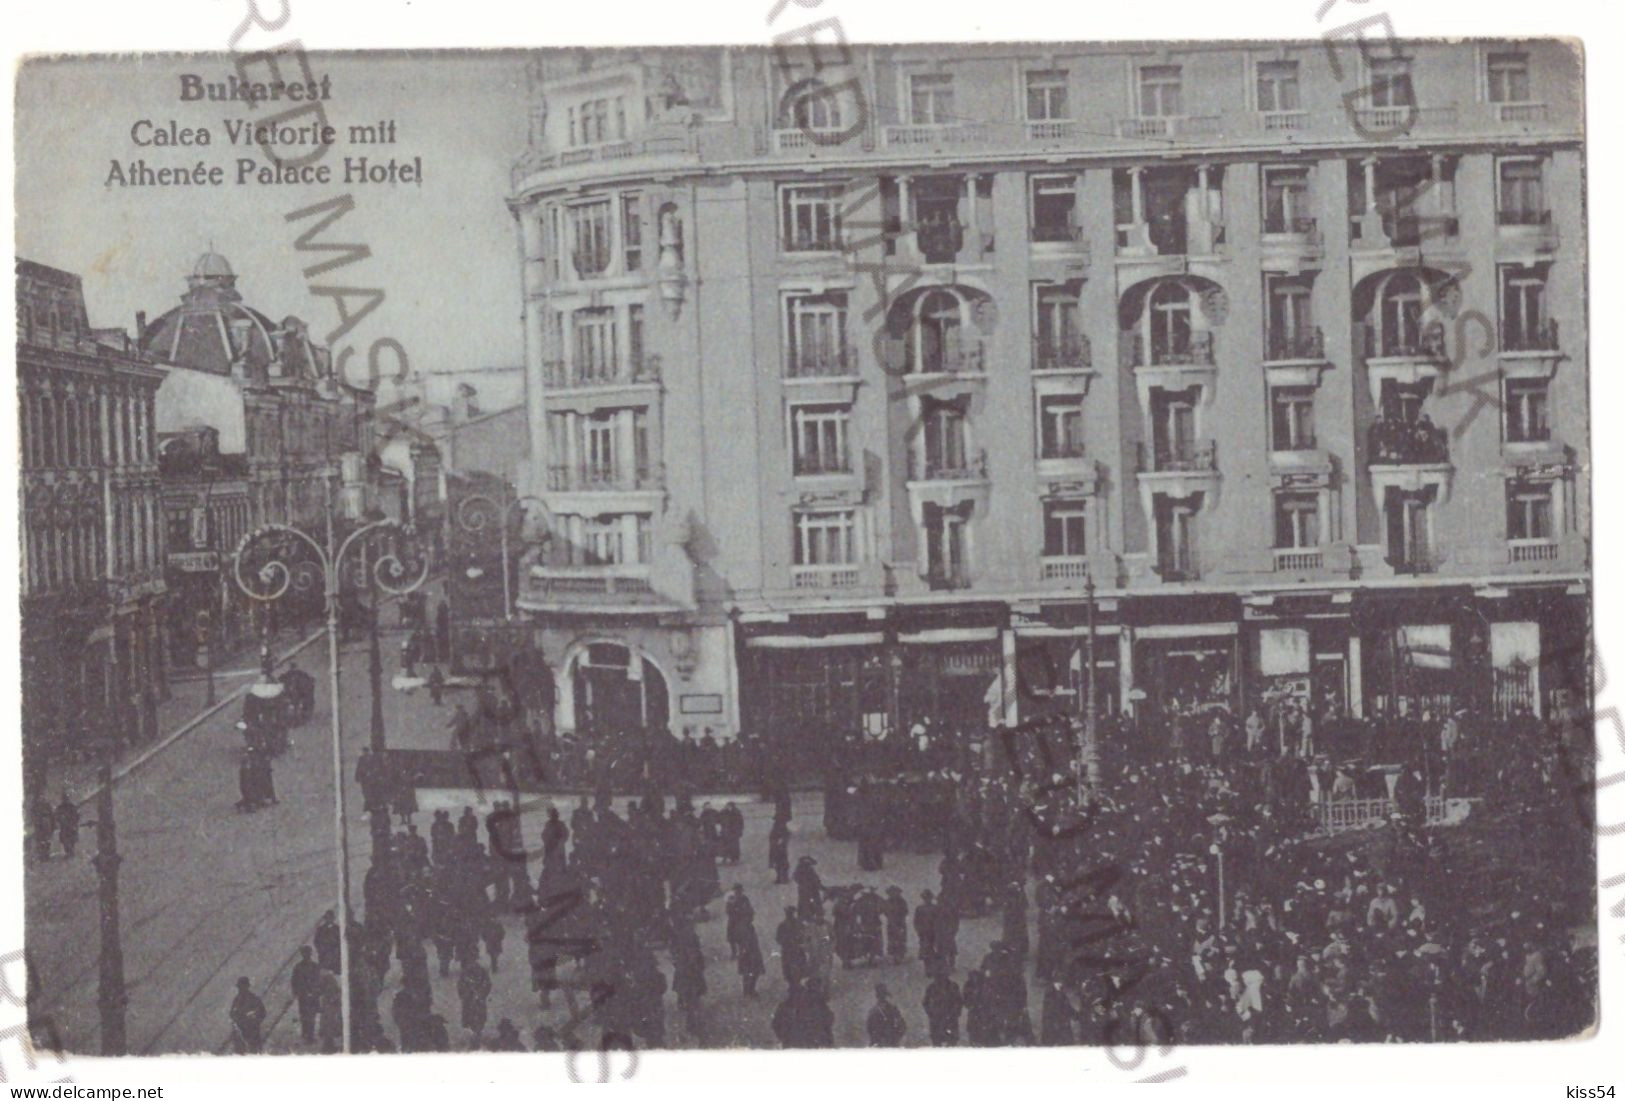 RO 47 - 20741 BUCURESTI, Victoriei Ave, Romania - Old Postcard - Used - 1927 - Roumanie